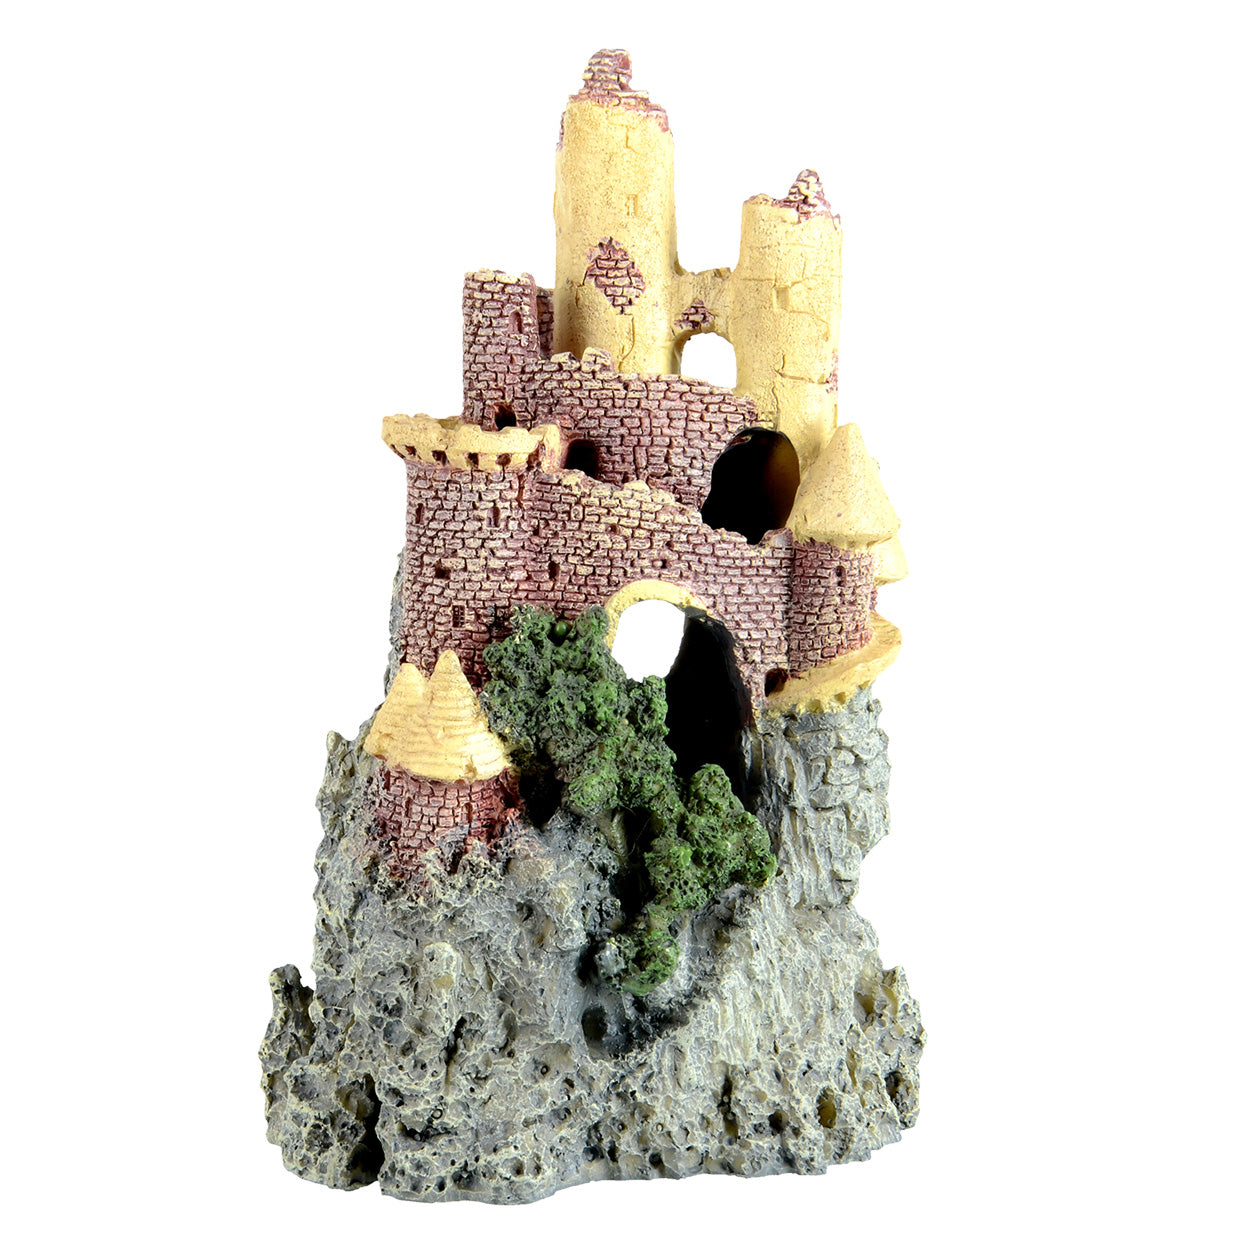 Underwater Treasures - Castle on Mountain